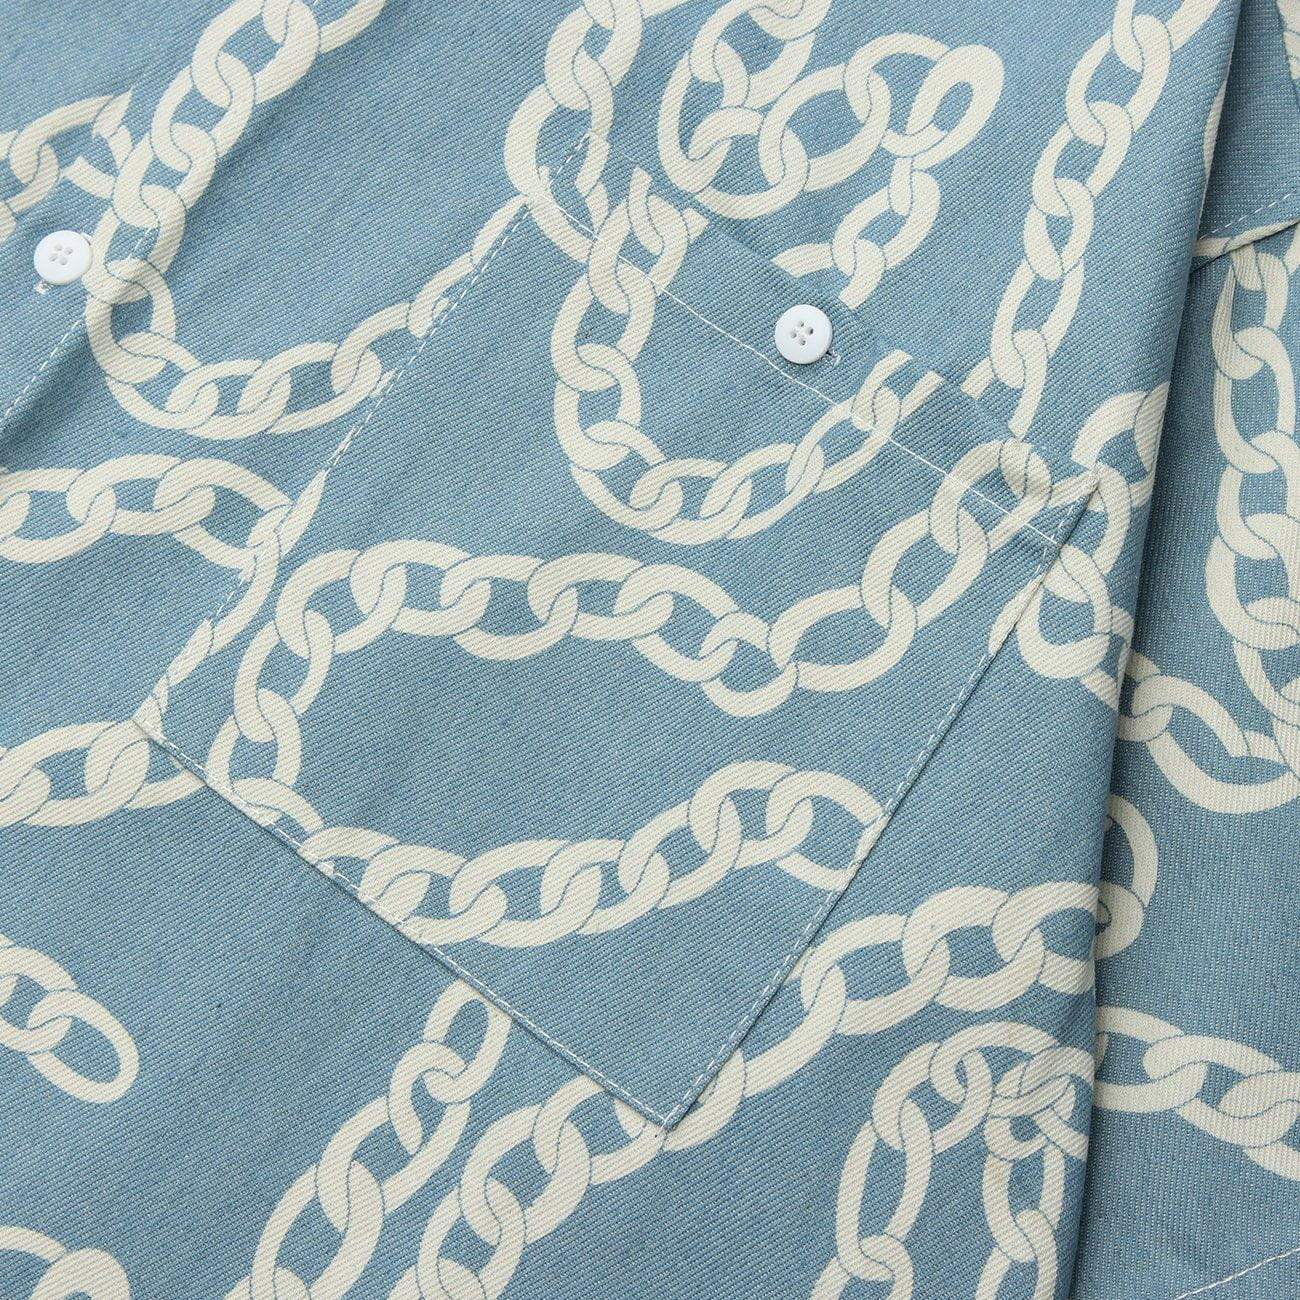 JUSTNOTAG Chain Pattern Full Print Short Sleeve Shirt